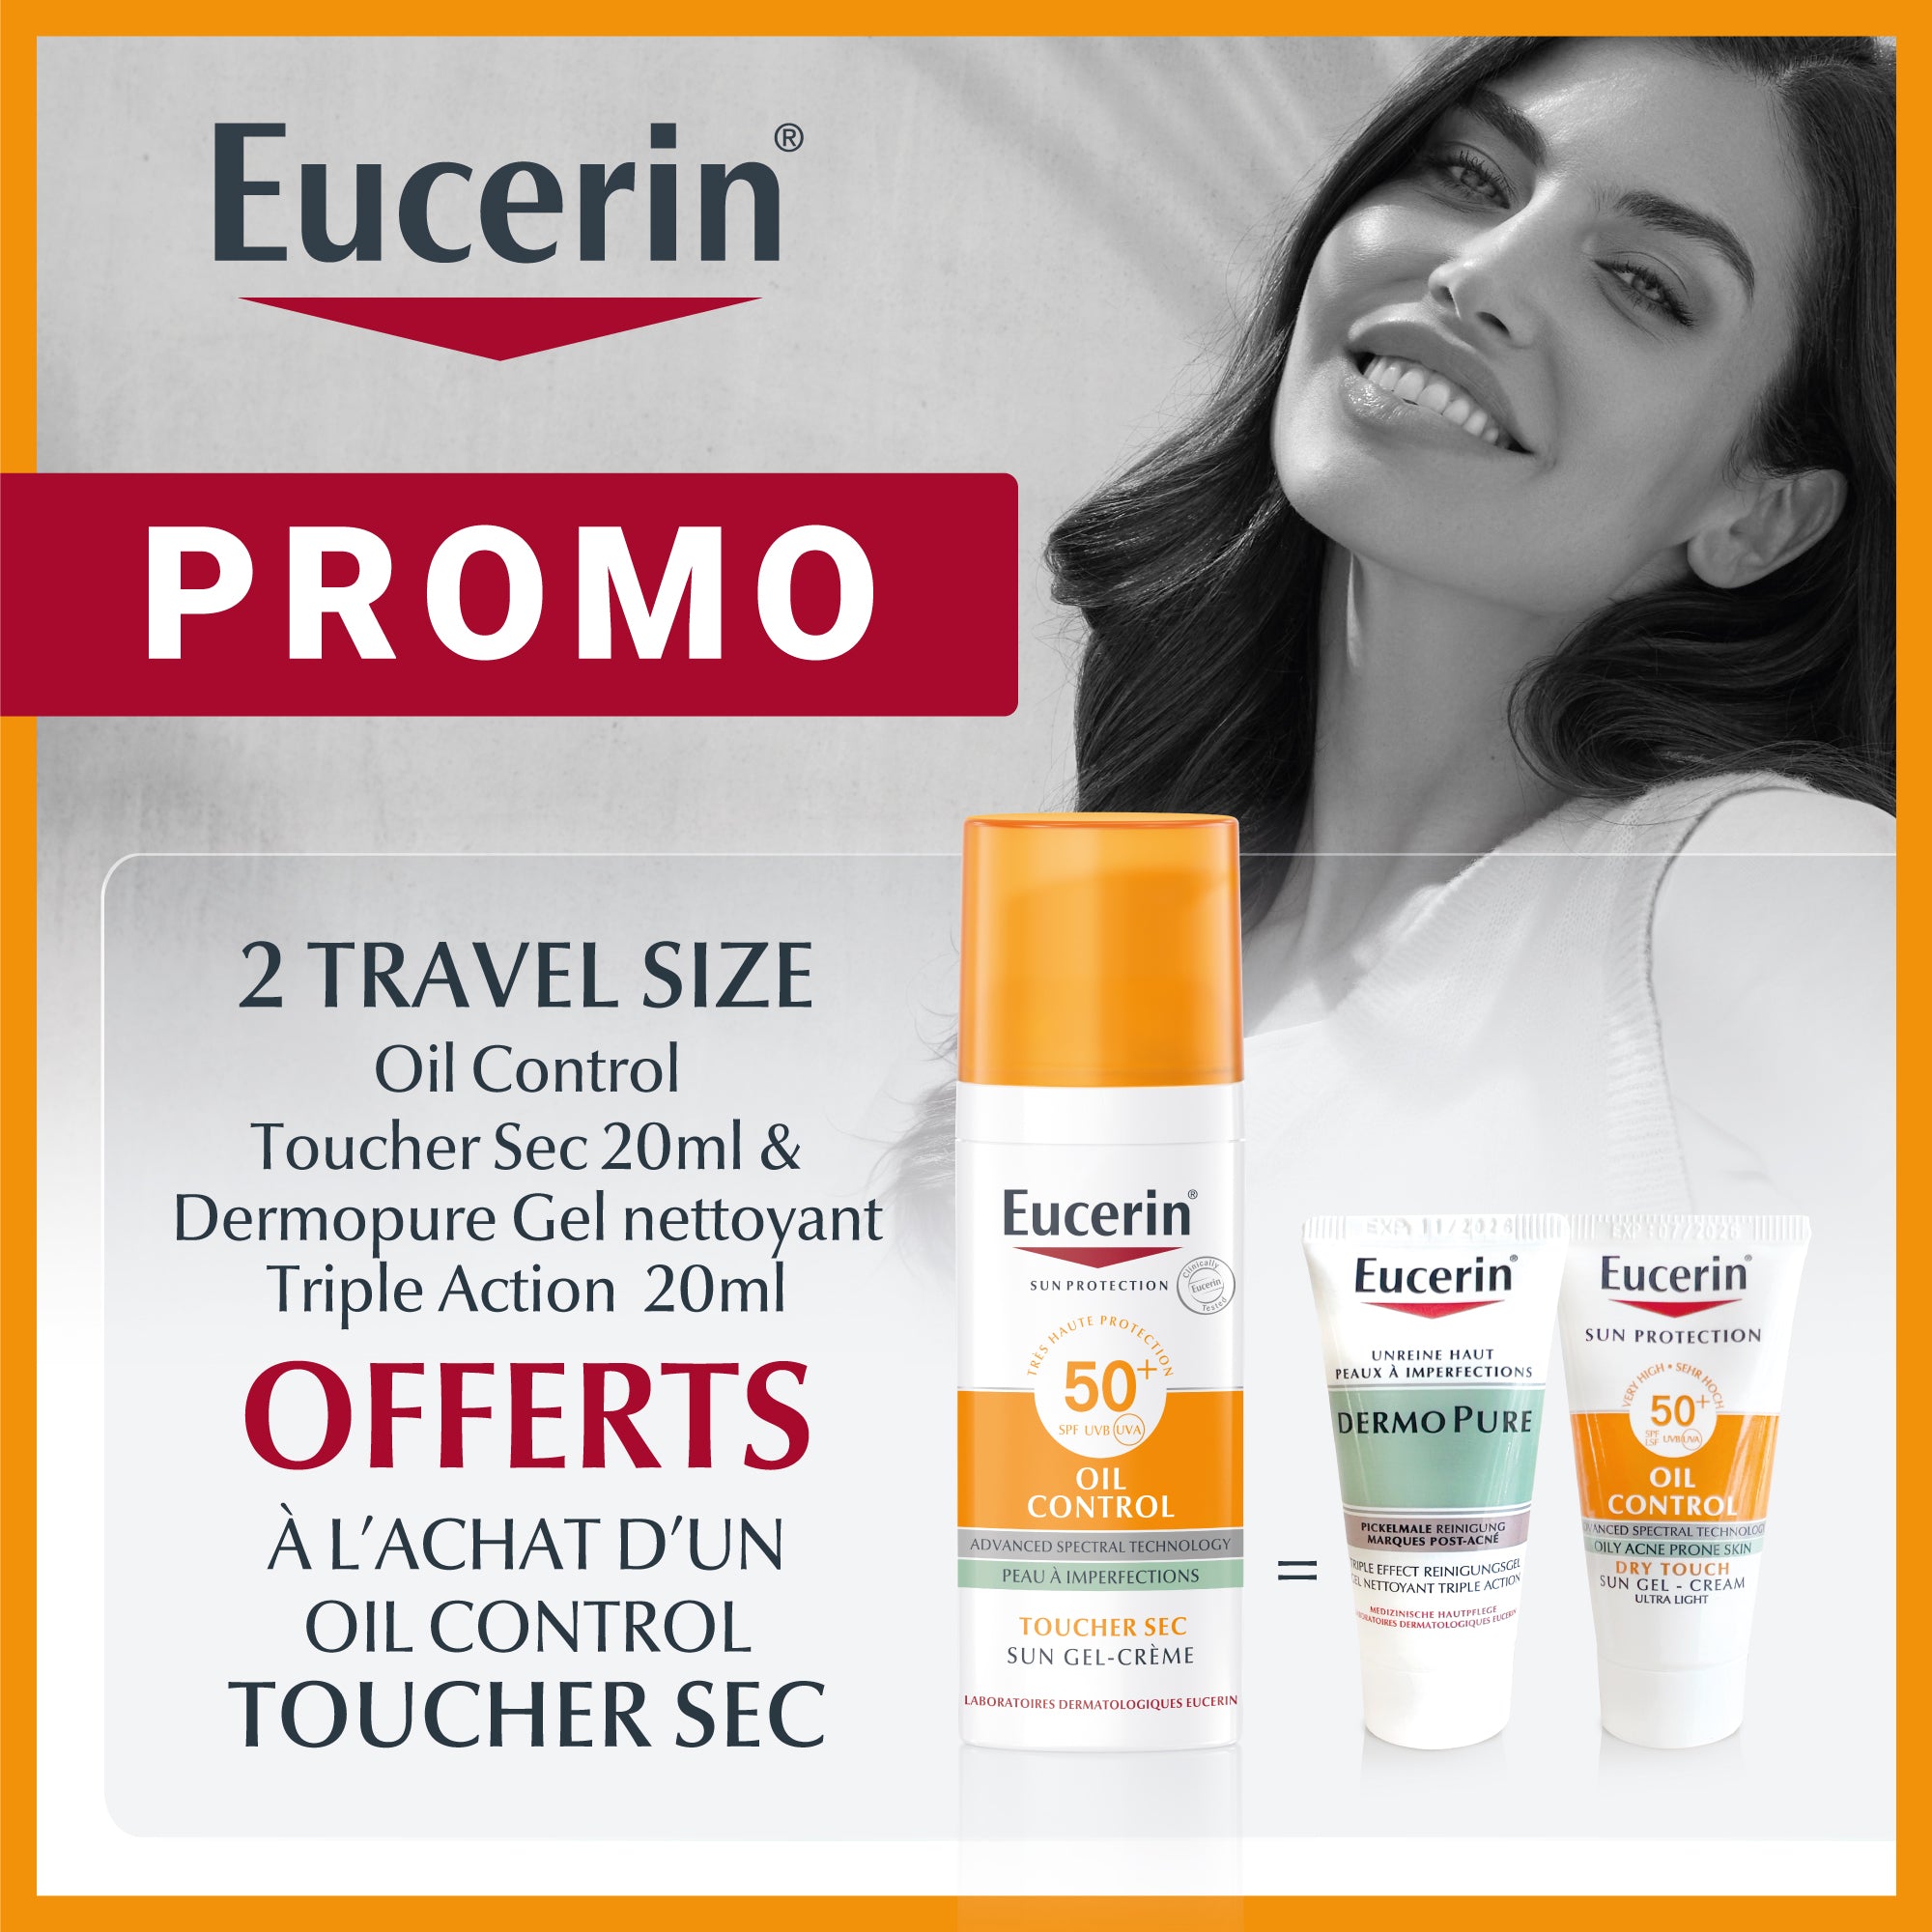 Eucerin – Sun Protection Oil Control Gel-Crème SPF50+ – 50 ml= Oil Control Toucher Sec 20ml + Dermopure Gel Nettoyant Triple Action 20ml OFFERTS